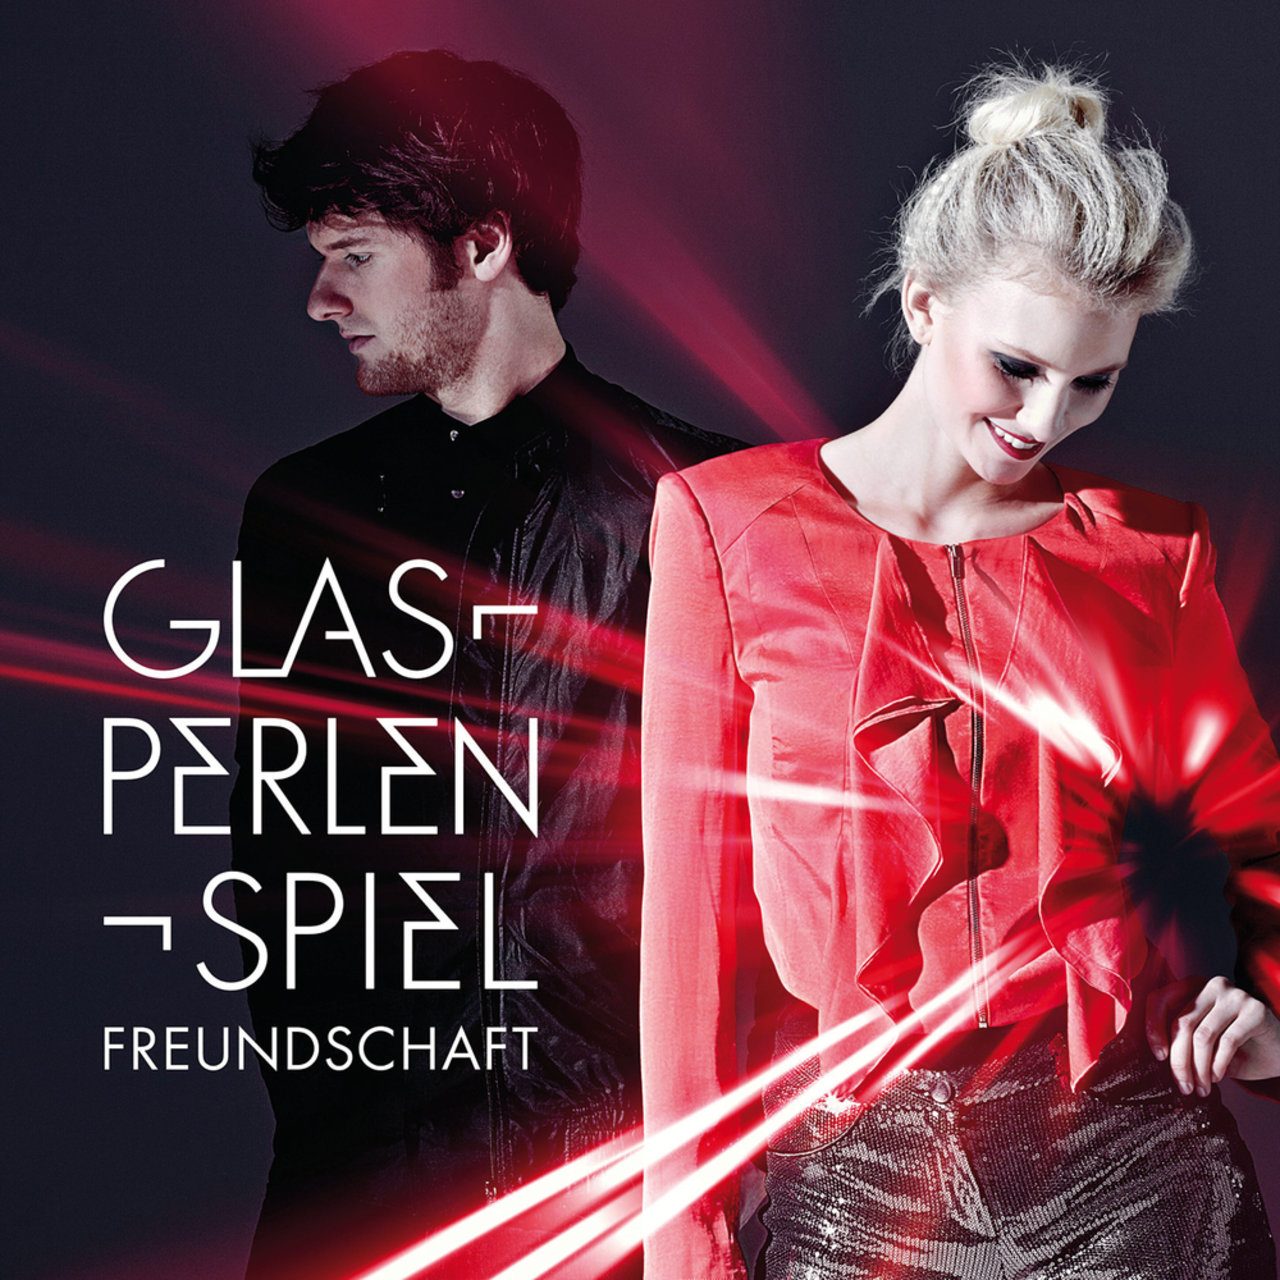 Glasperlenspiel Freundschaft cover artwork